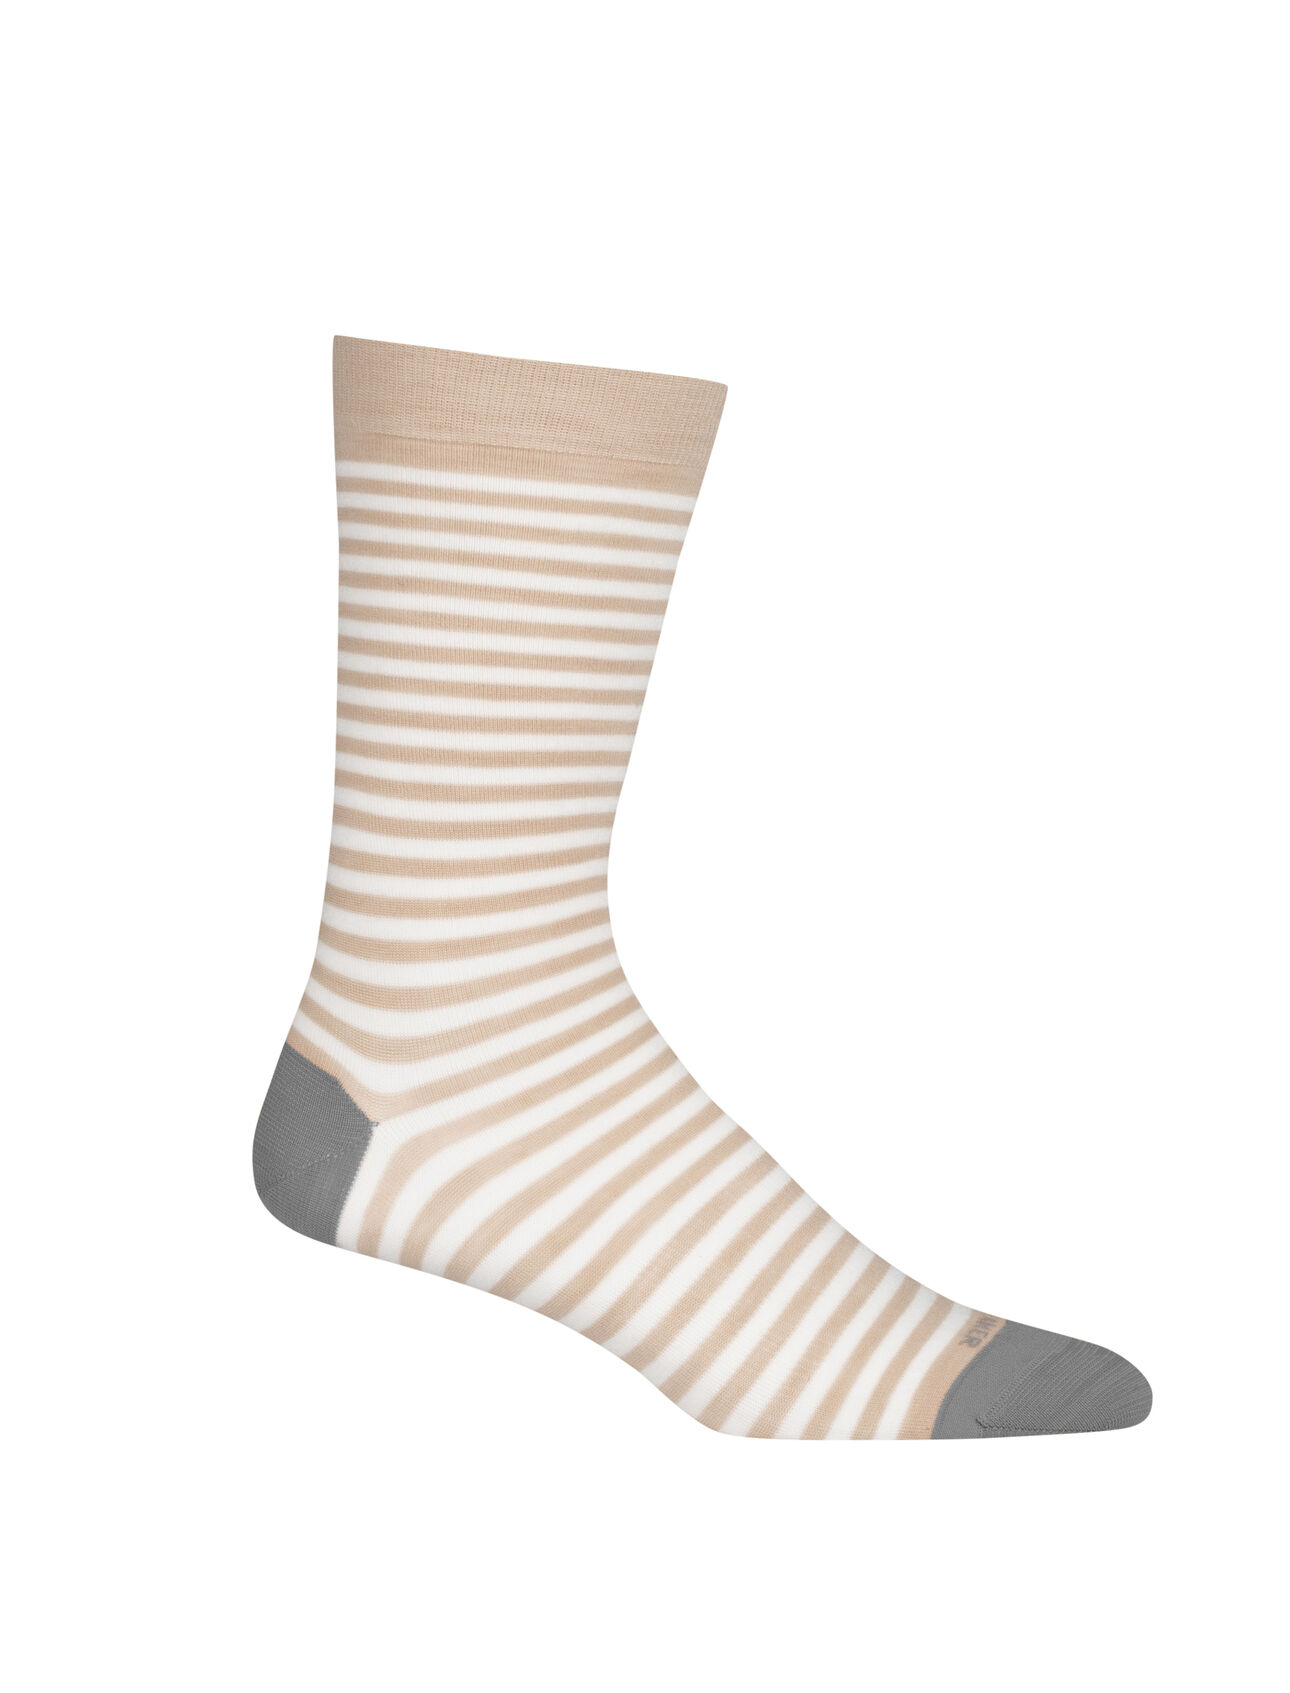 Mens Merino Lifestyle Fine Gauge Crew Stripe Socks Lightweight casual socks perfect for everyday use, the Lifestyle Fine Gauge Crew Stripe combines premium merino wool comfort with a durable construction.